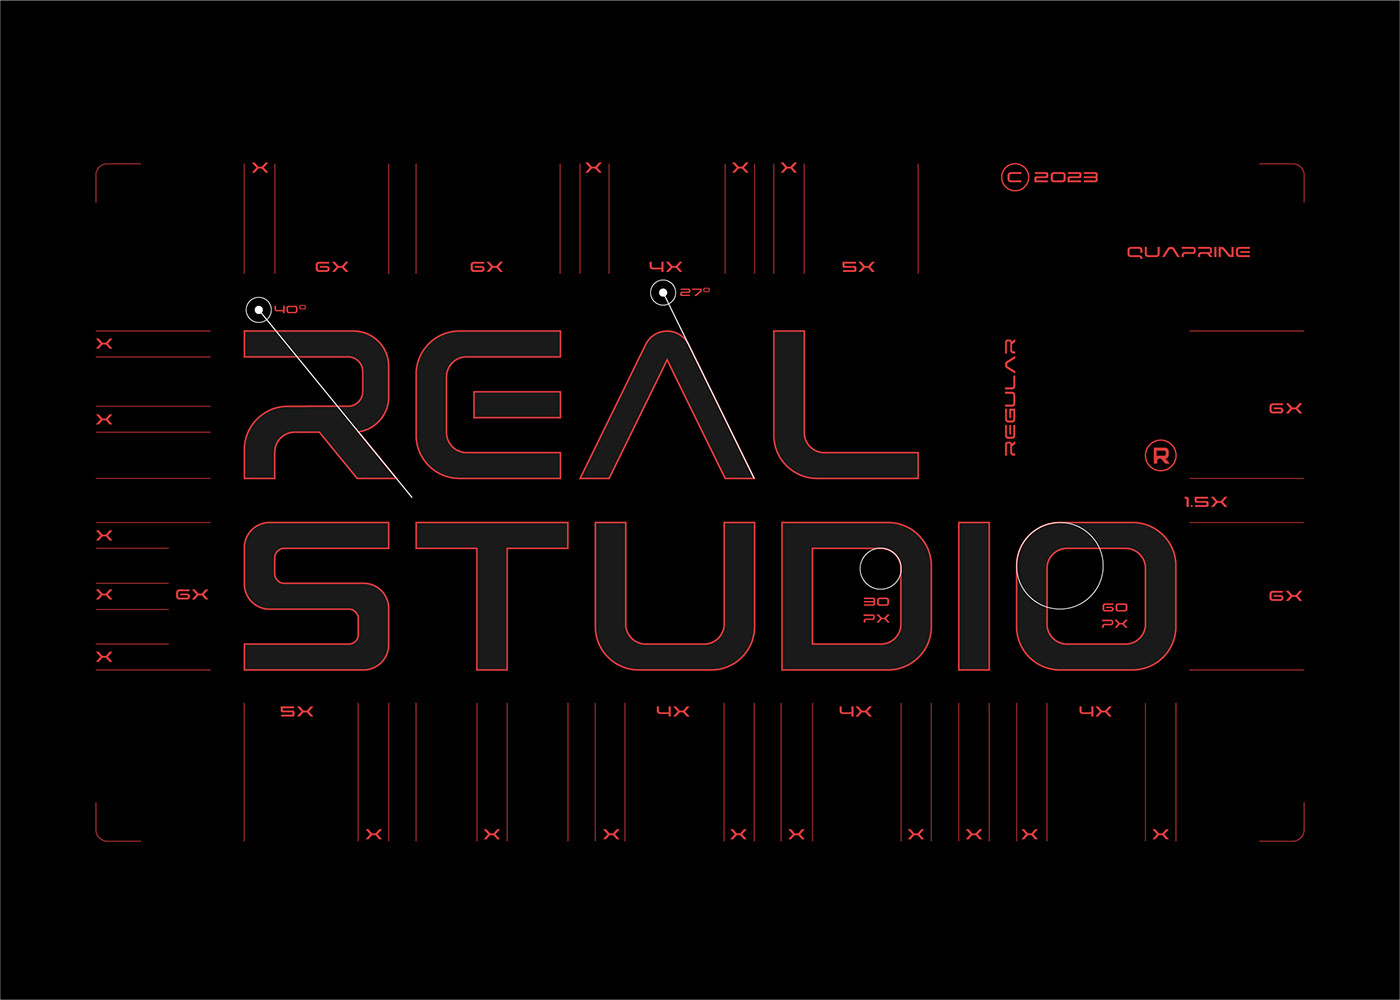 logo Logo Design real studio Logotype logos Logotipo brand identity branding  Brand Design visual identity